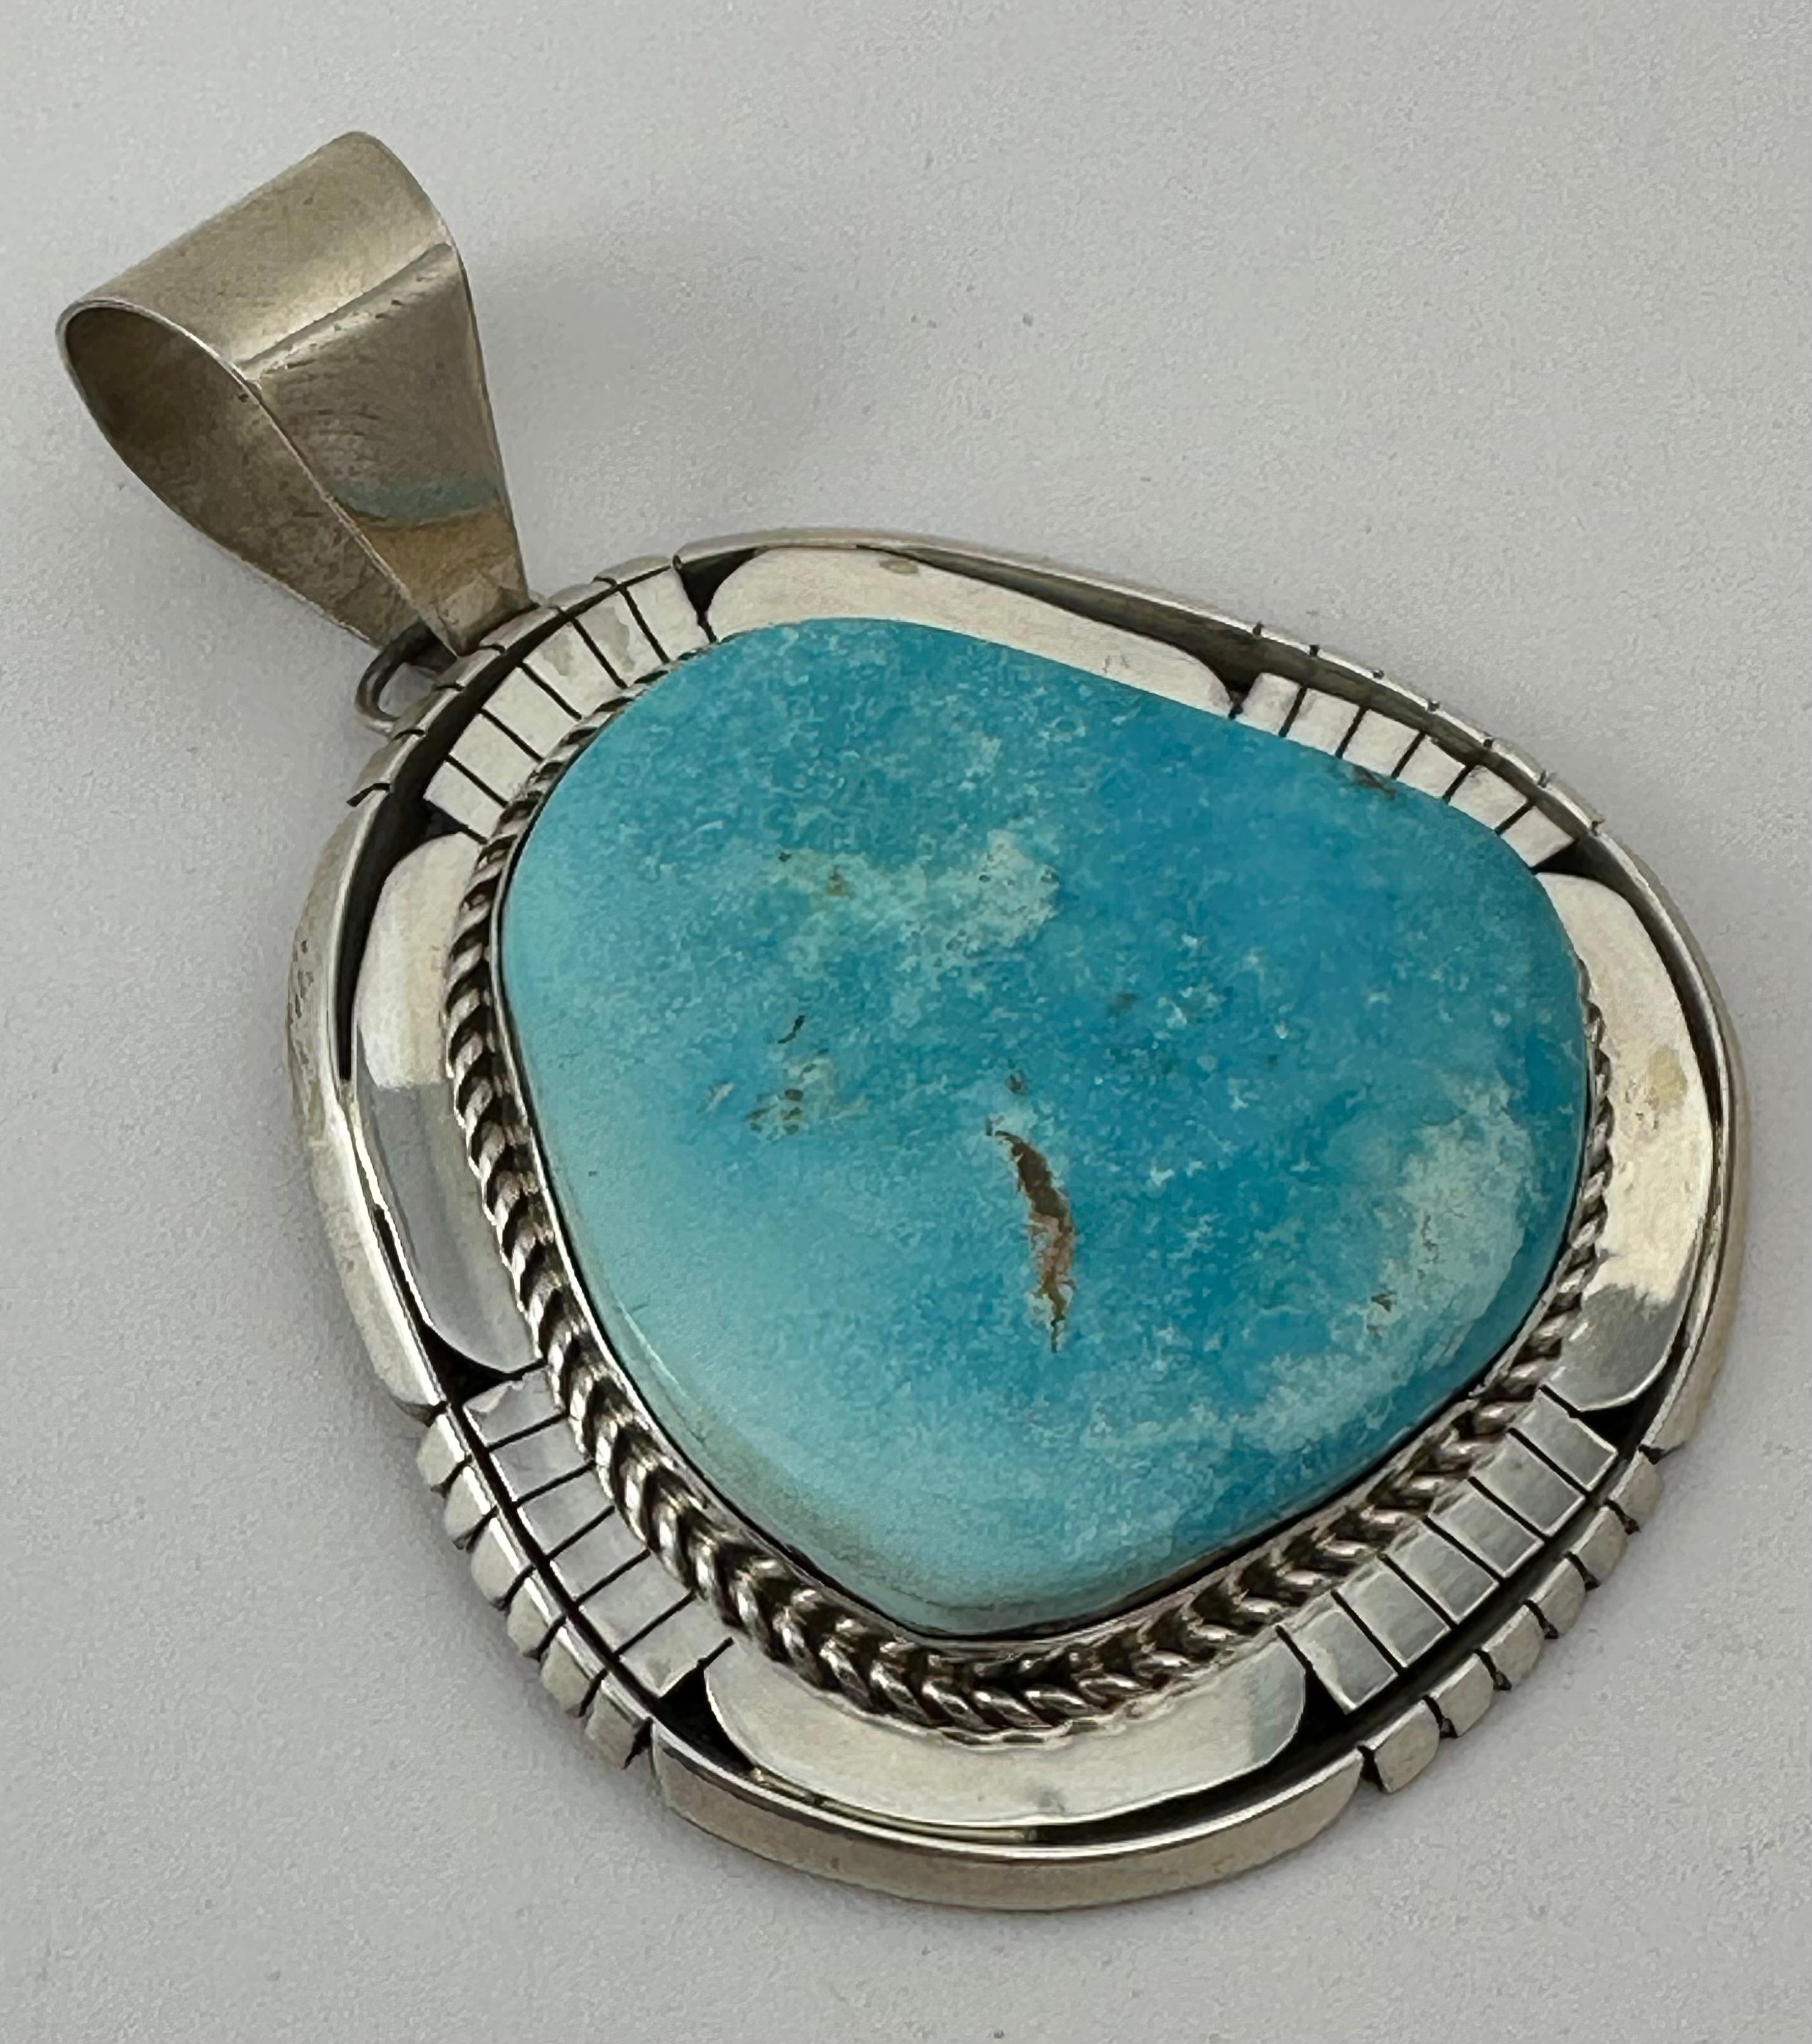 Pendentif en argent sterling .925 Sleeping Beauty Turquoise  par l'Artistics Navajo Betta Lee
Mesure approximativement 2